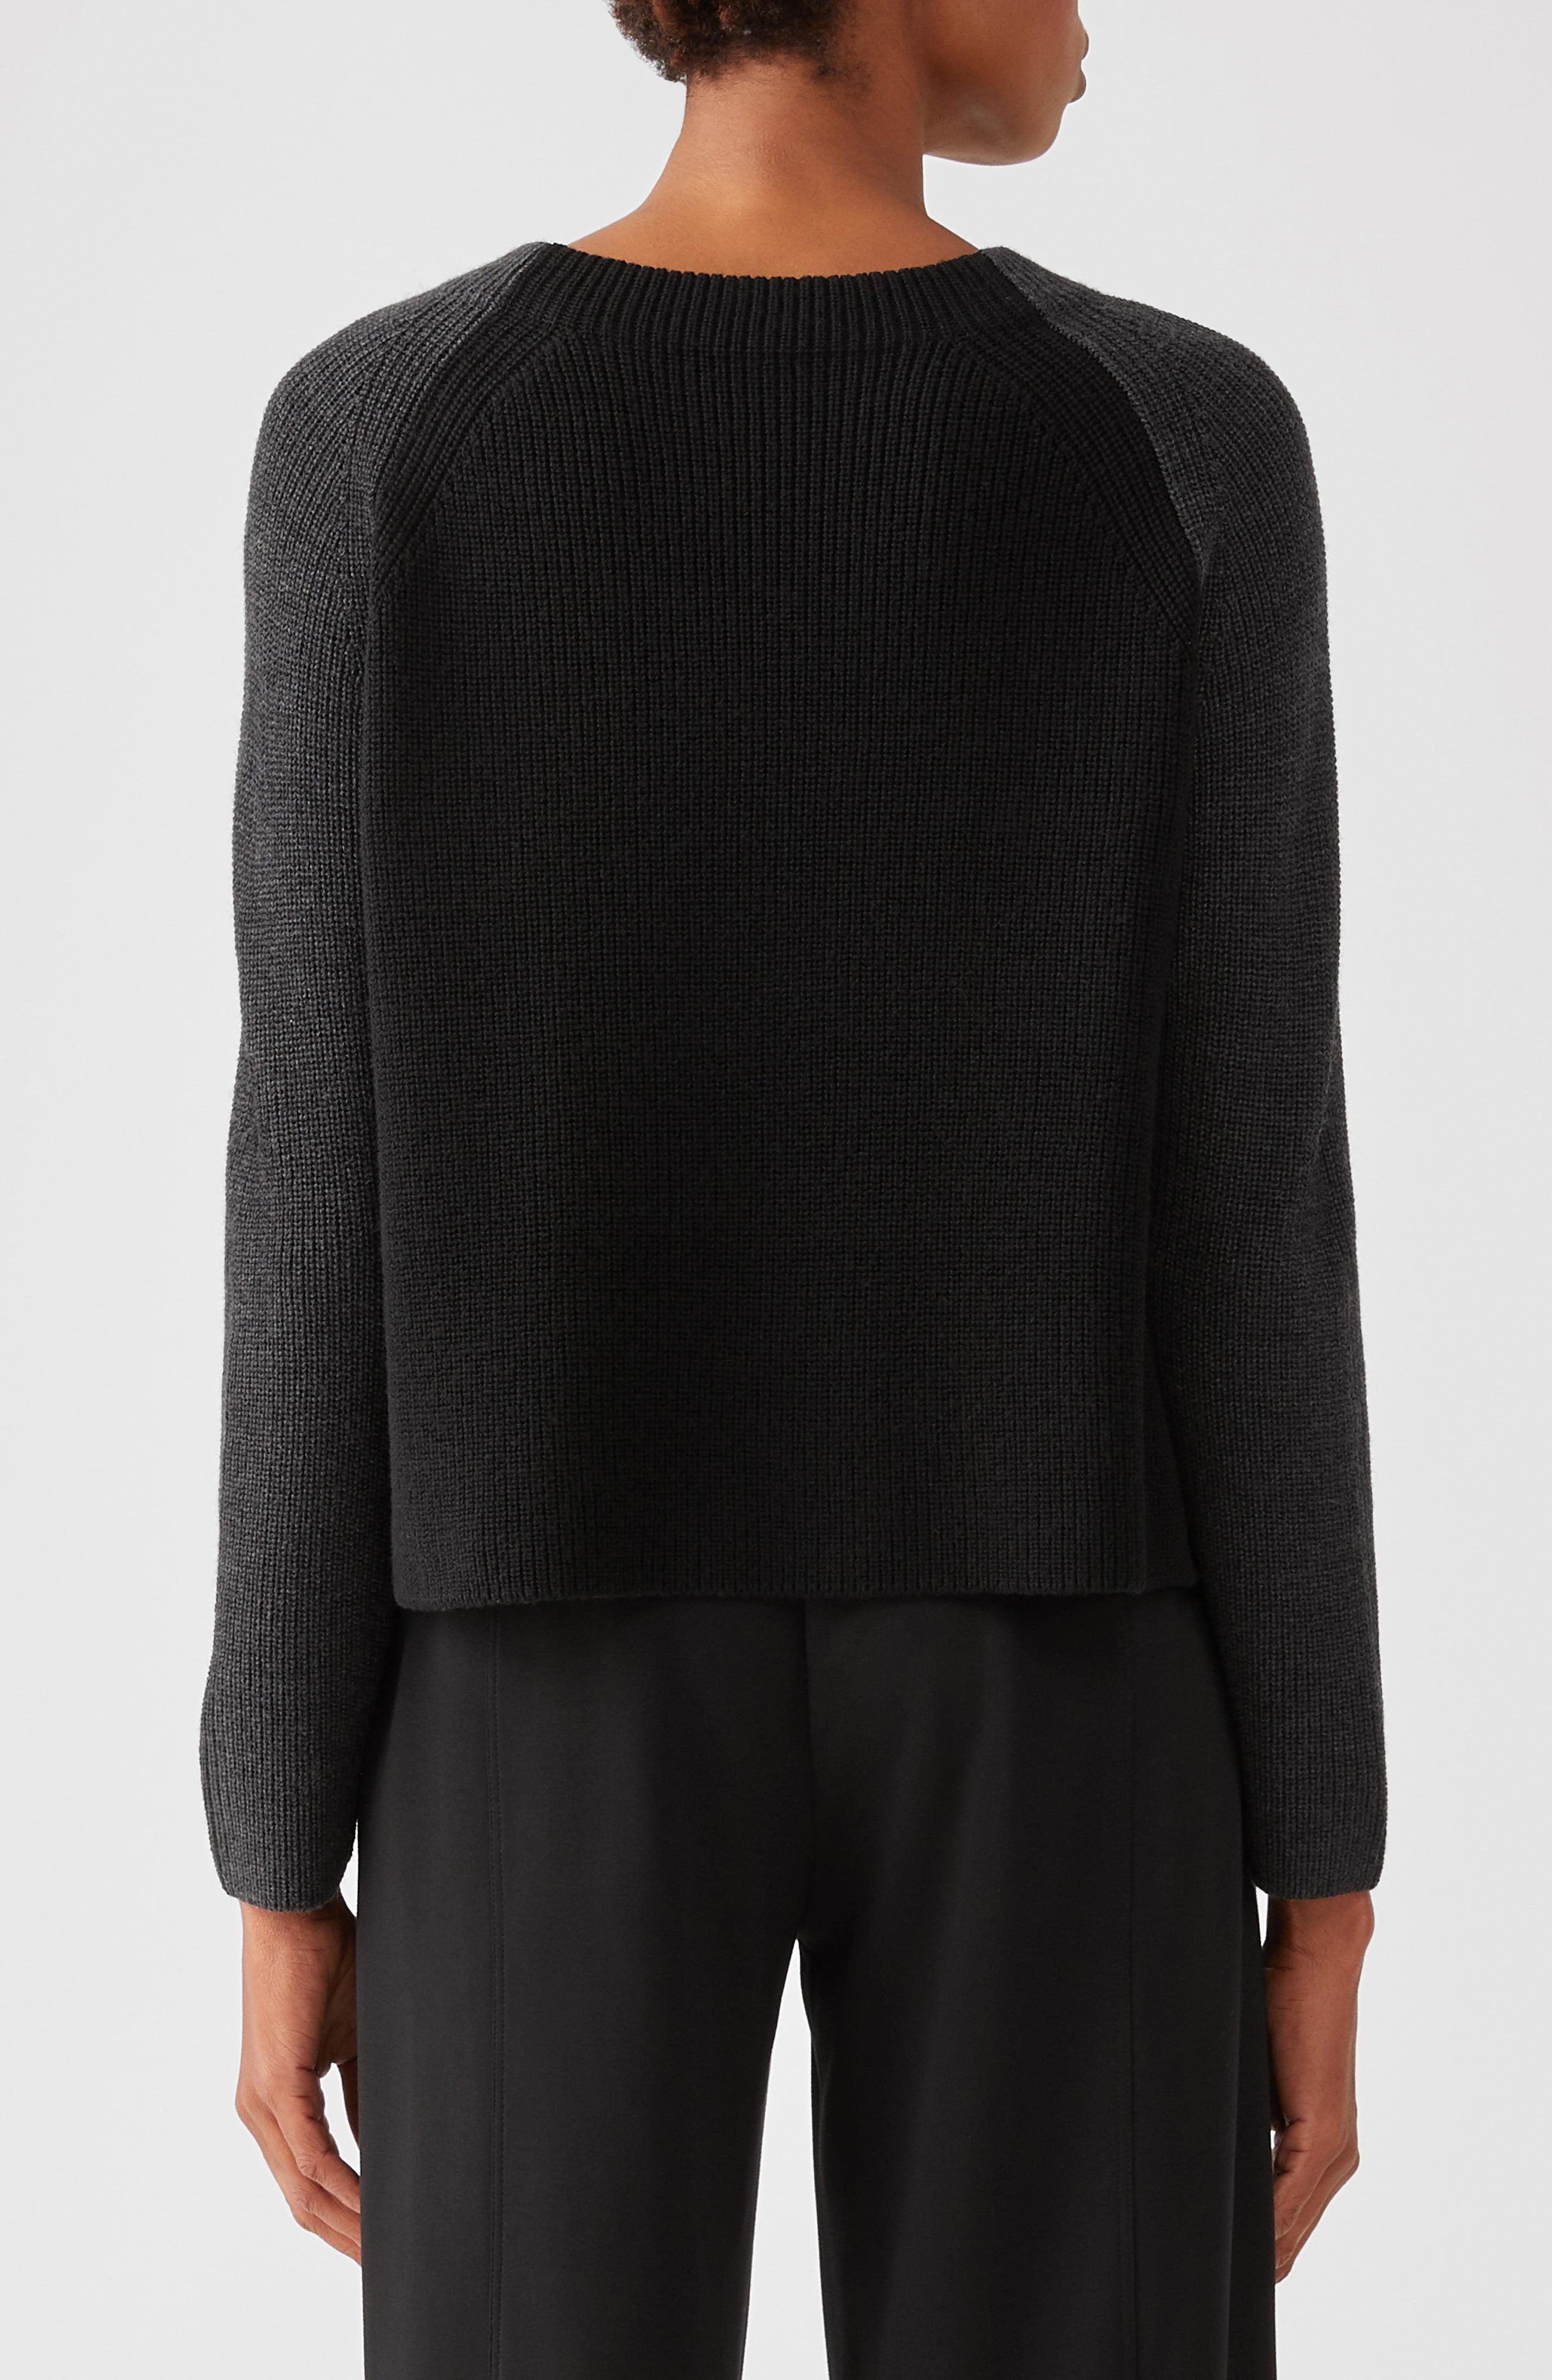 Eileen Fisher Boxy Merino Wool Sweater in Black/ Charcoal (Black) - Lyst